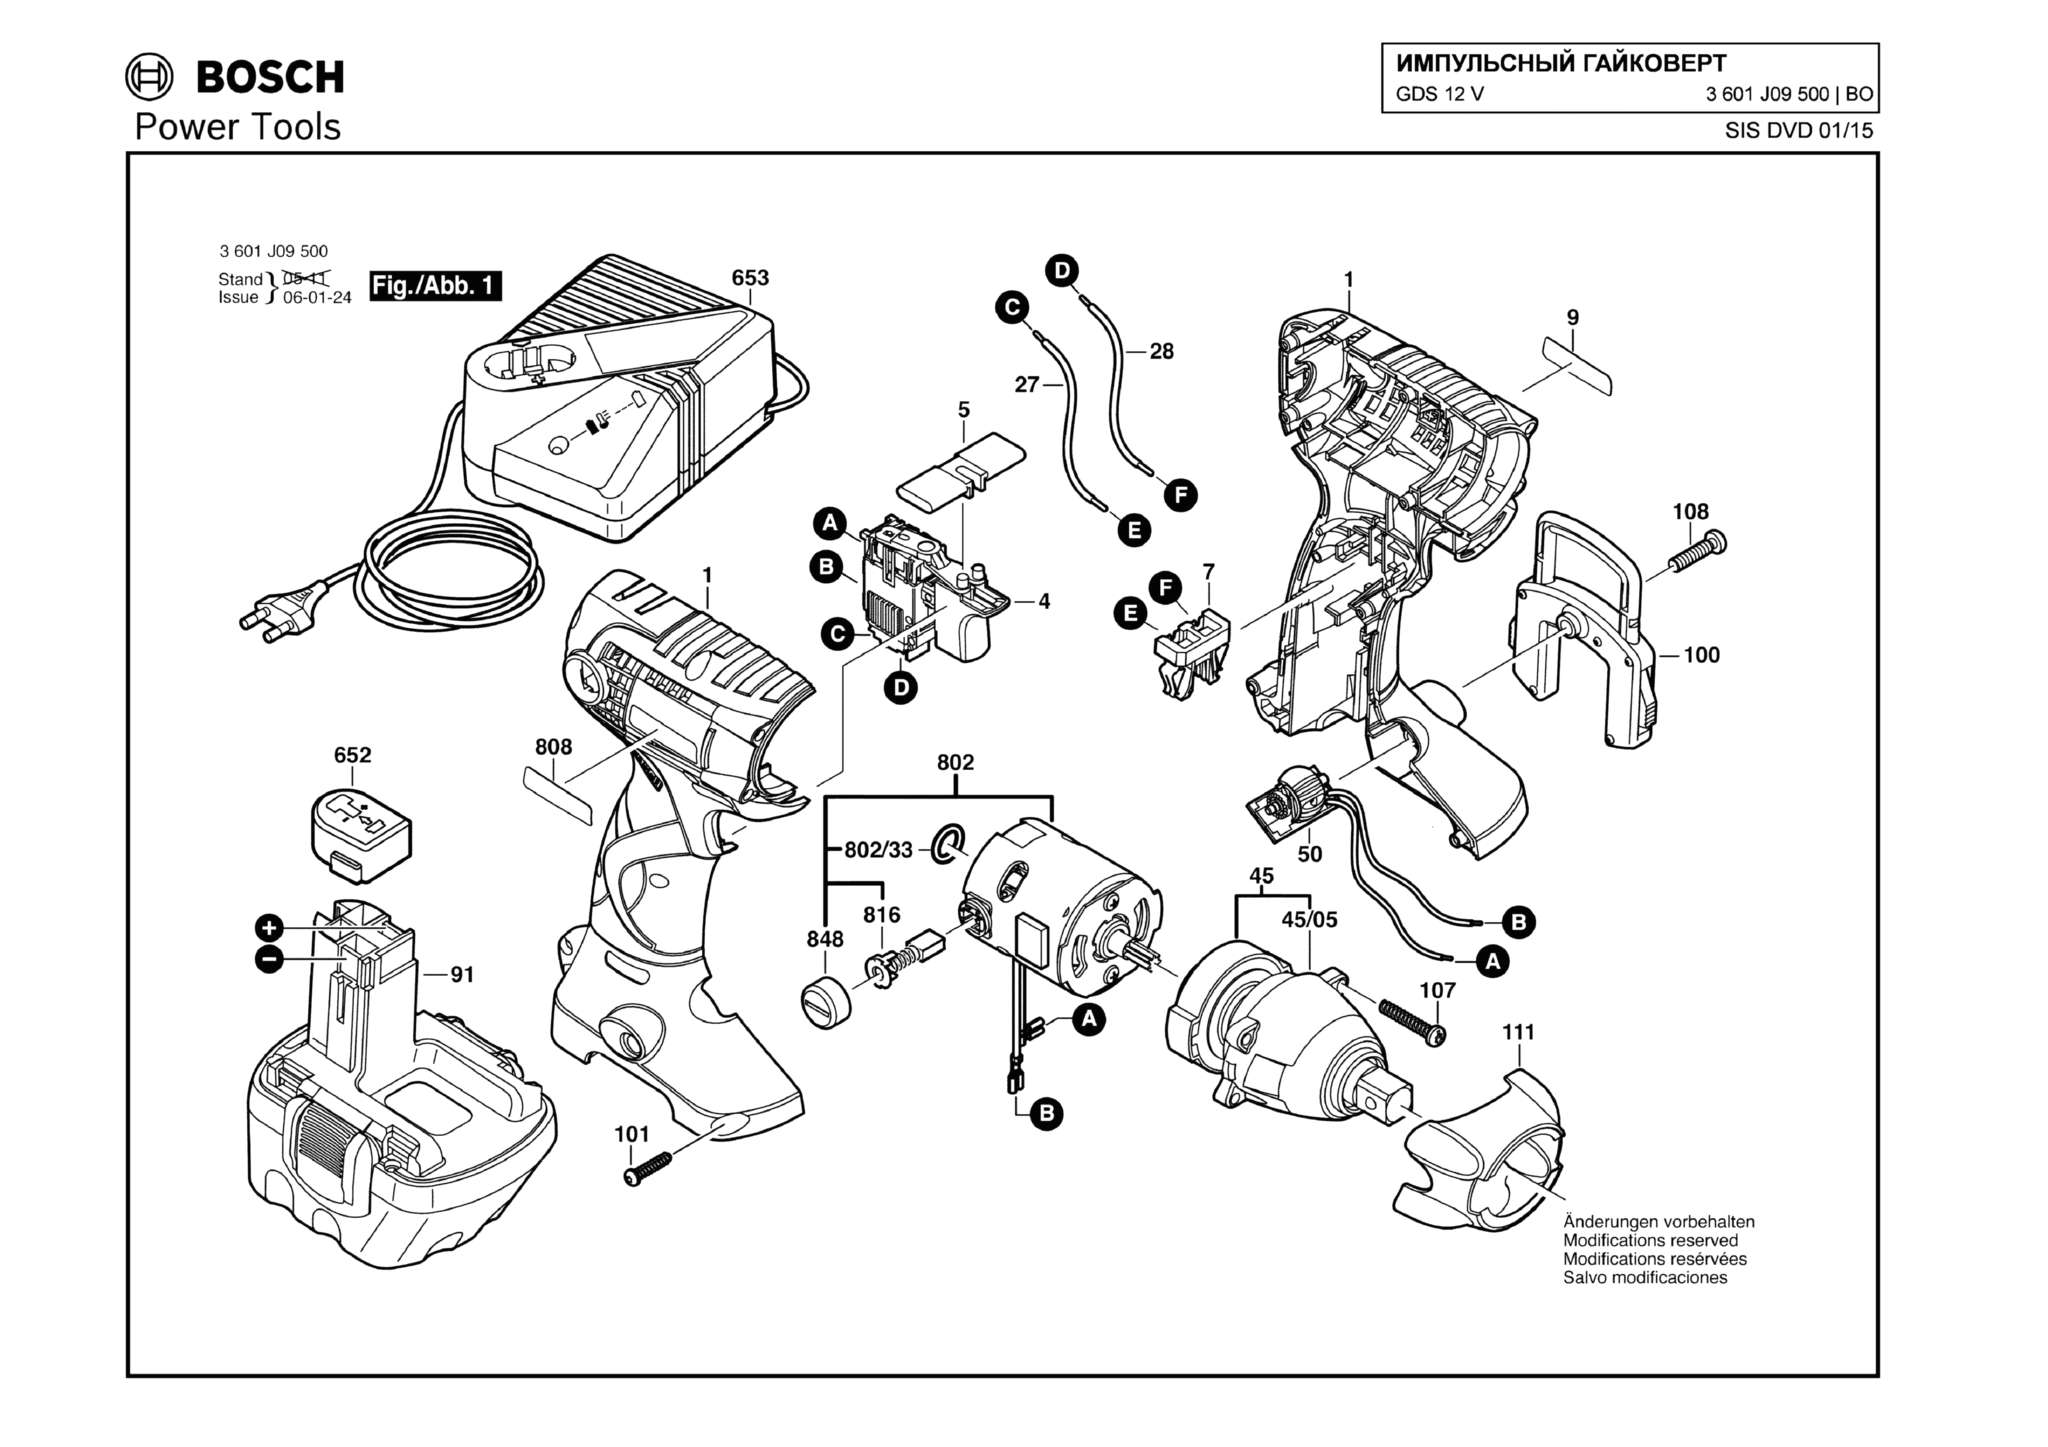 Запчасти, схема и деталировка Bosch GDS 12 V (ТИП 3601J09500)